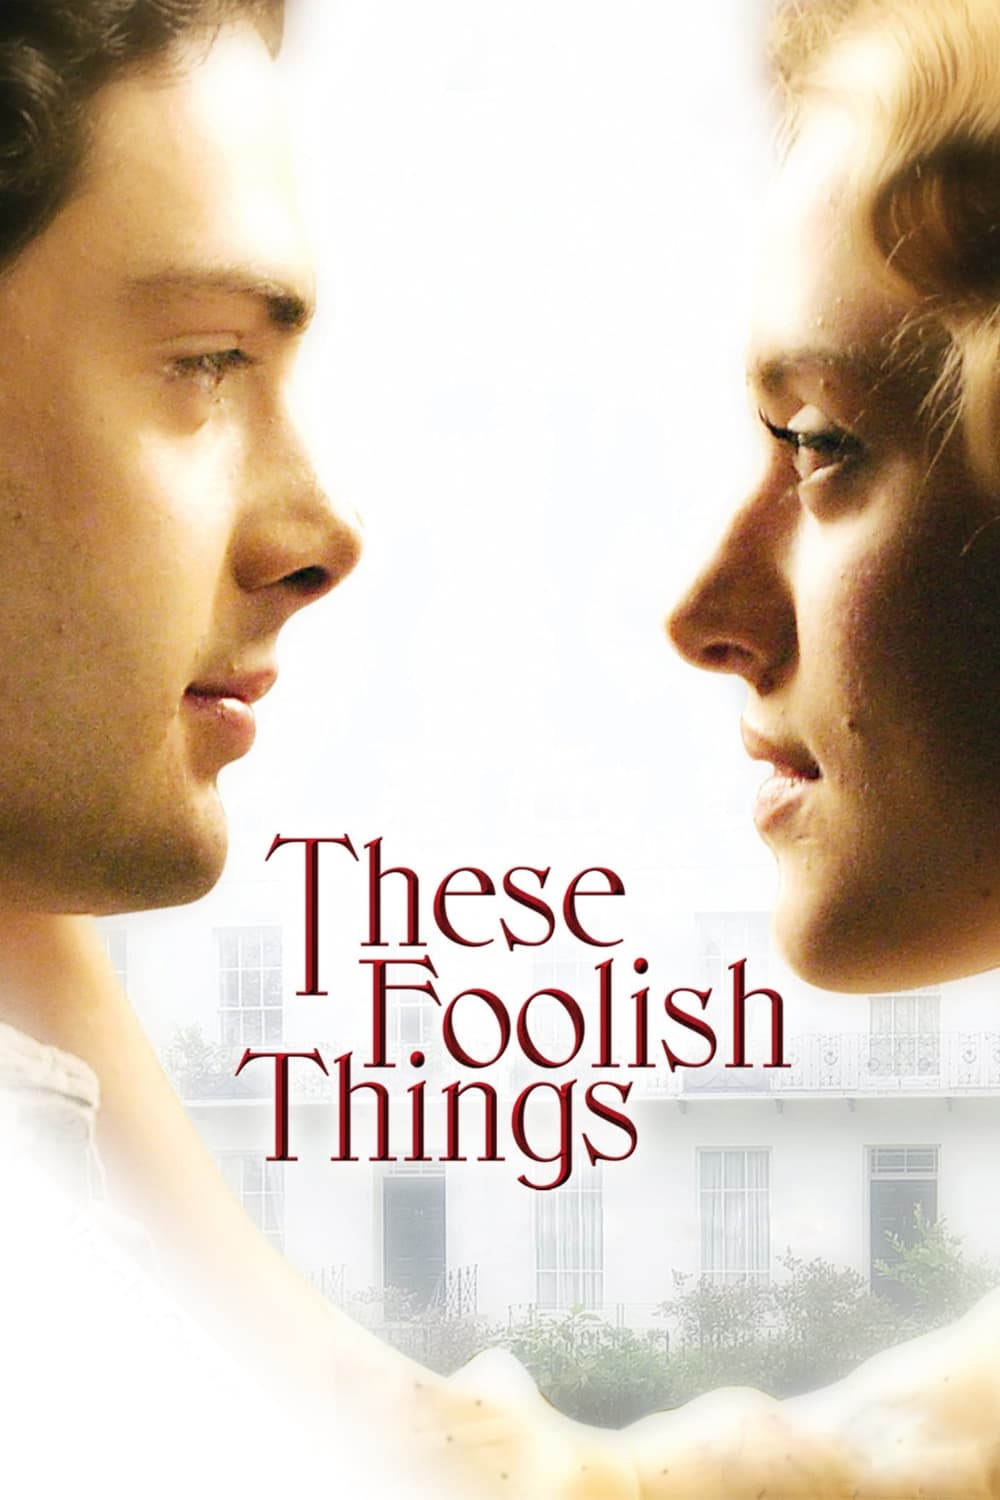 These Foolish Things - Verrückt vor Liebe (2006)